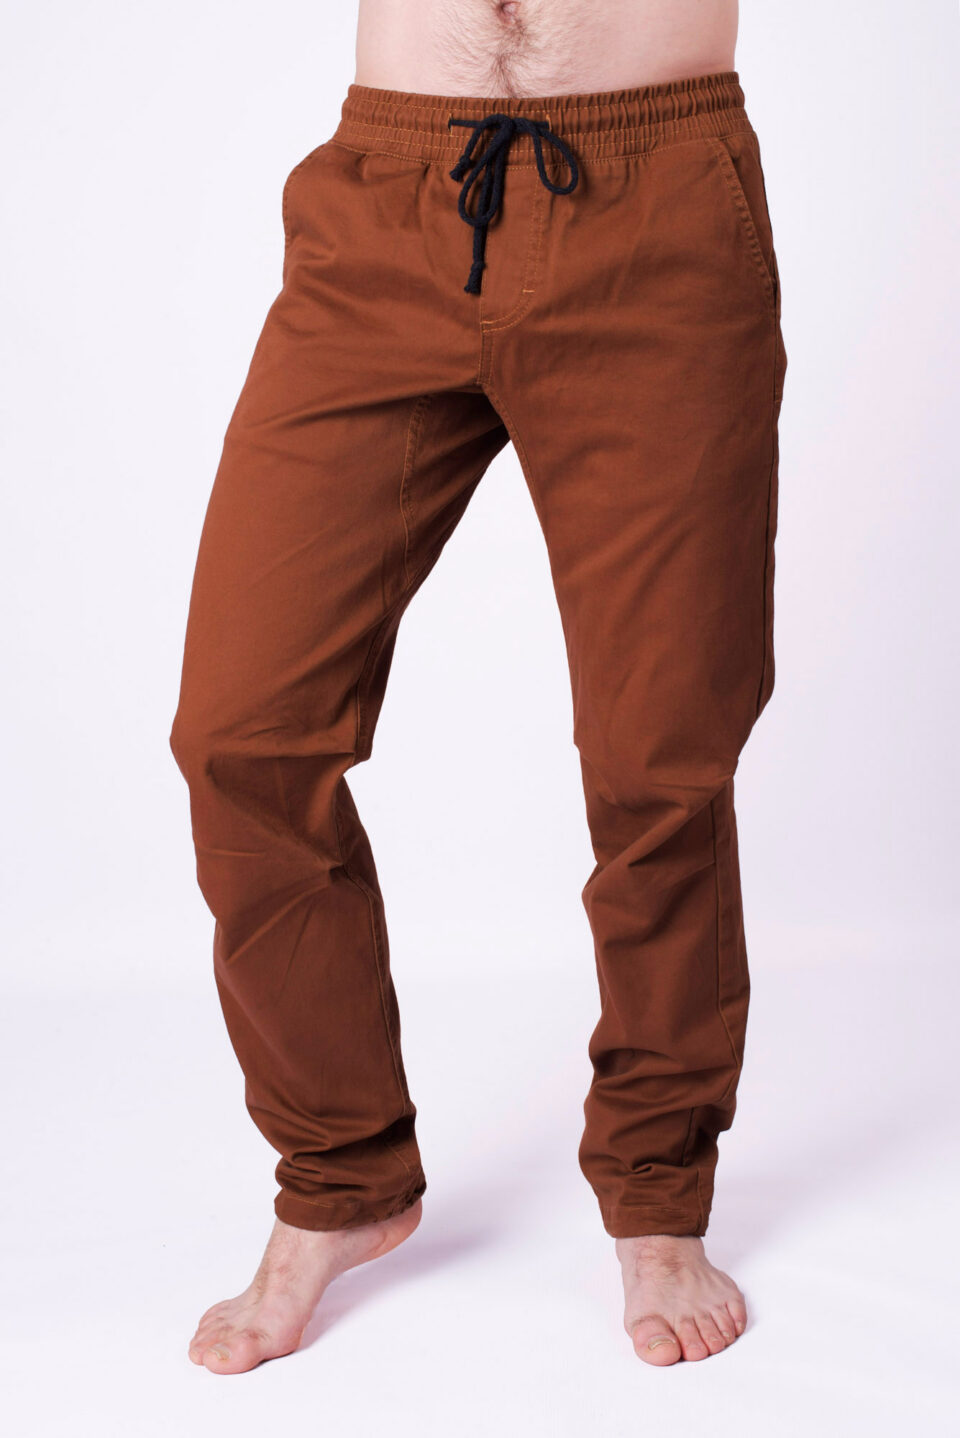 Cotton Crosscut pants- brown